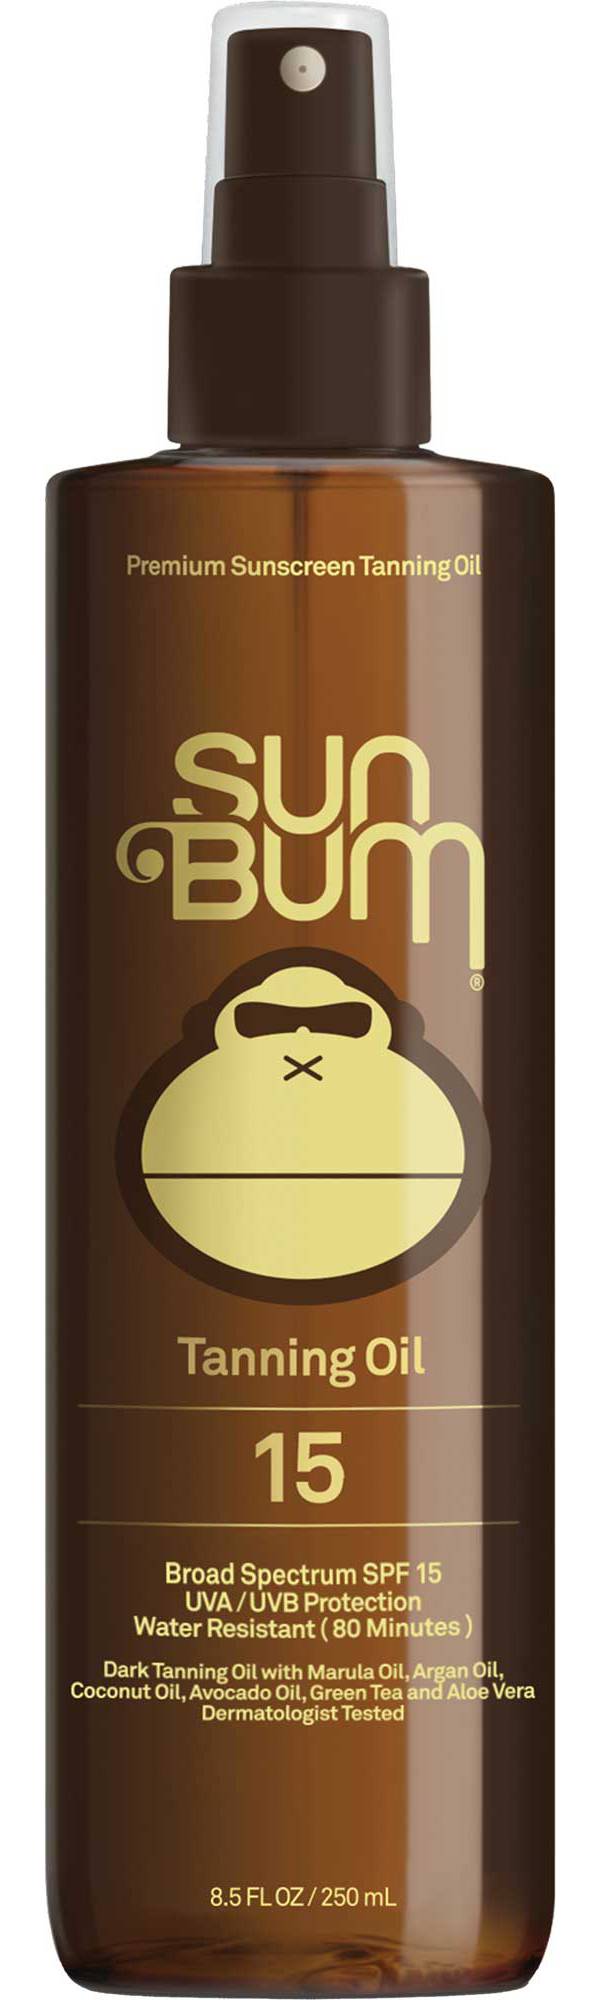 Sun Bum SPF 15 Tanning Oil product image